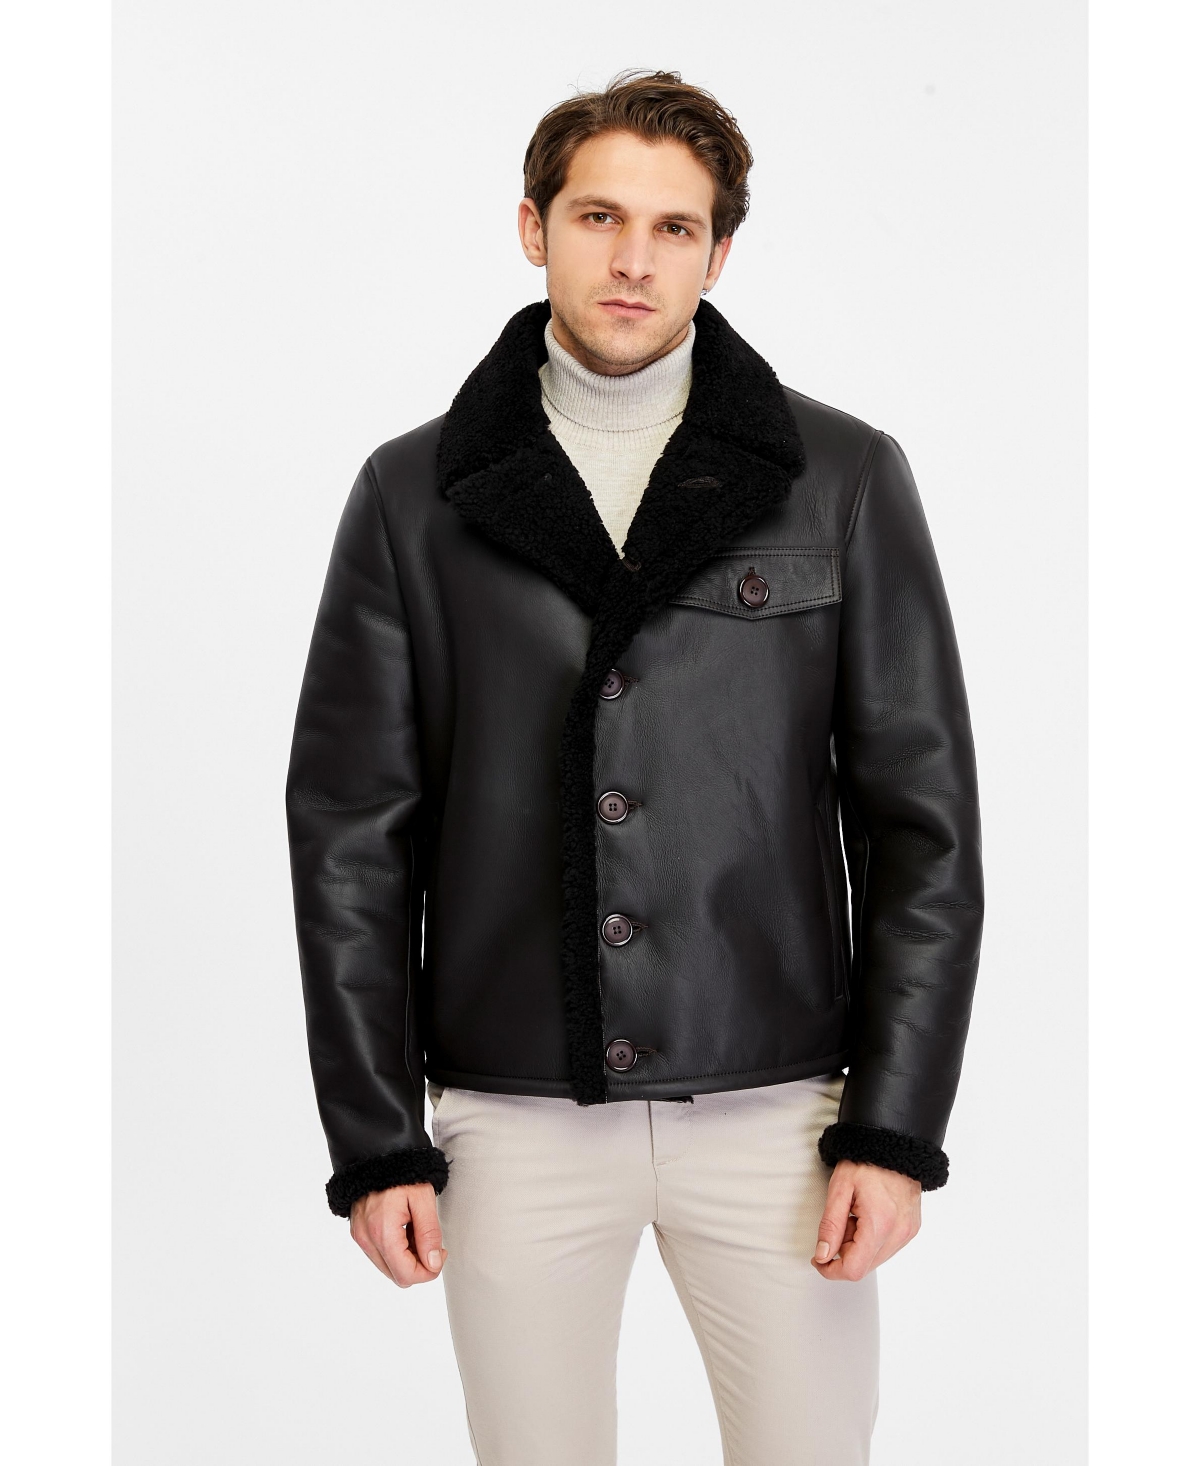 Men's Fashion Leather Jacket Wool, Brown - Brown